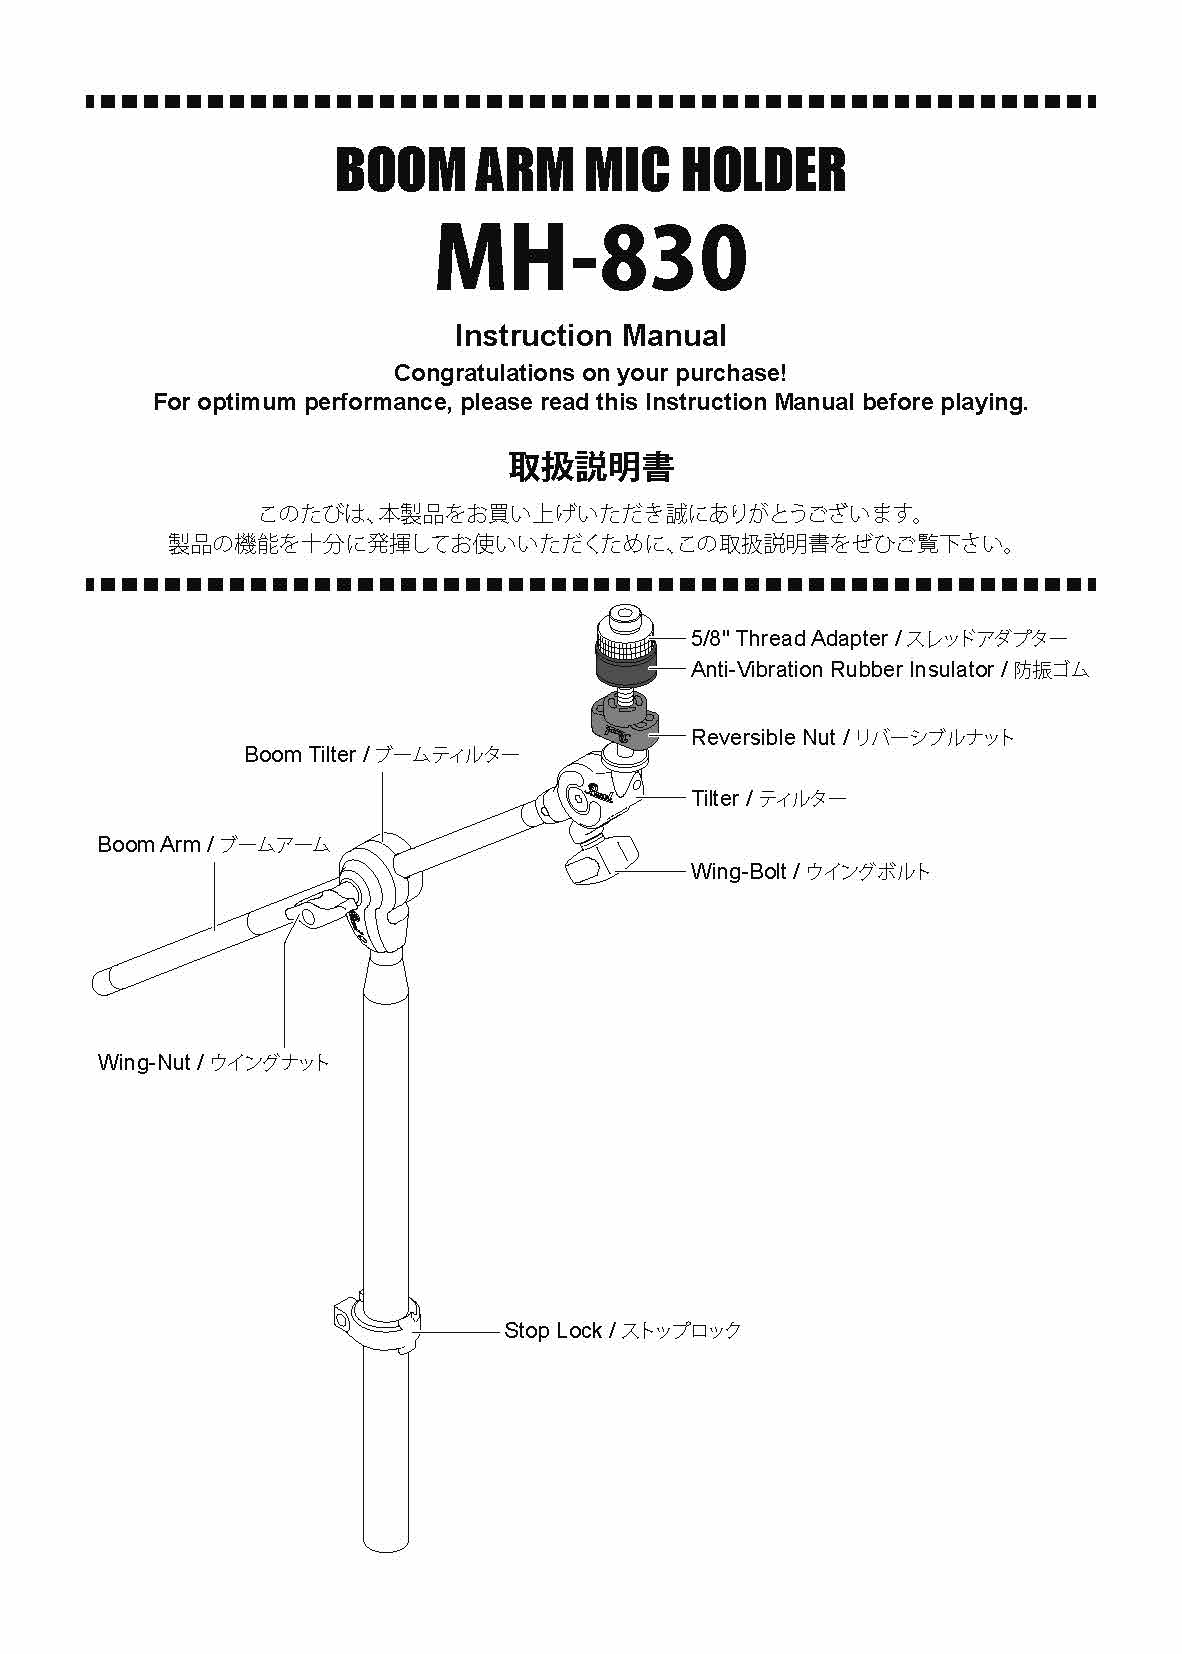 MH-830 BOOM ARM MIC HOLDER Manual